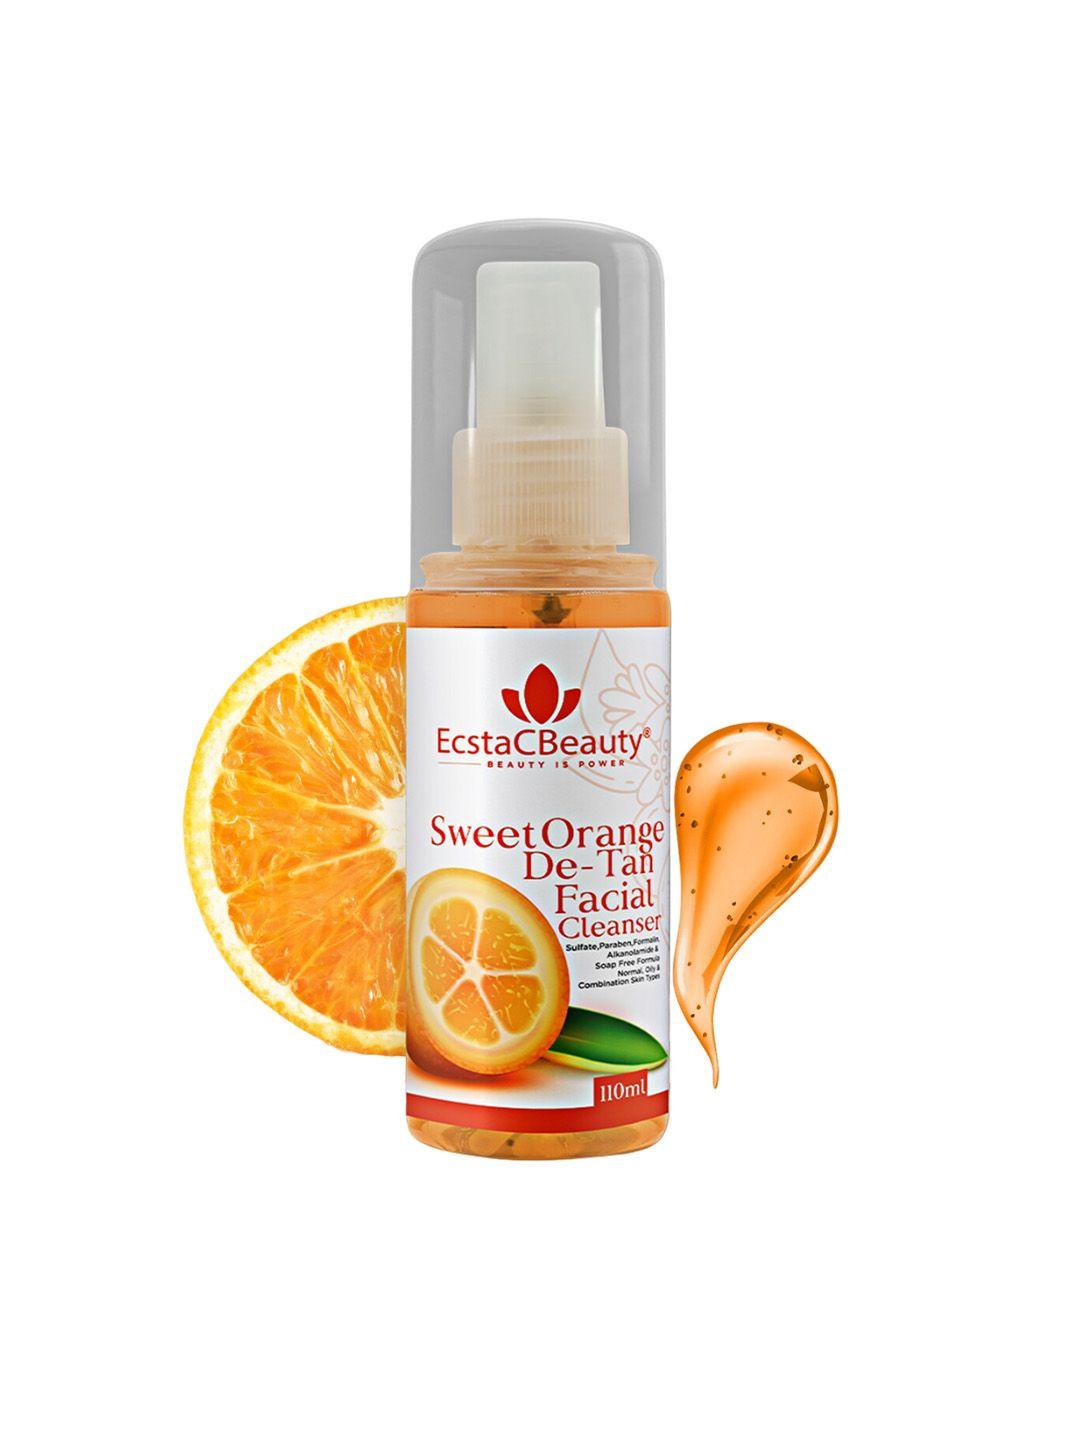 ecstacbeauty natural sweet orange de tan facial cleanser - 110ml